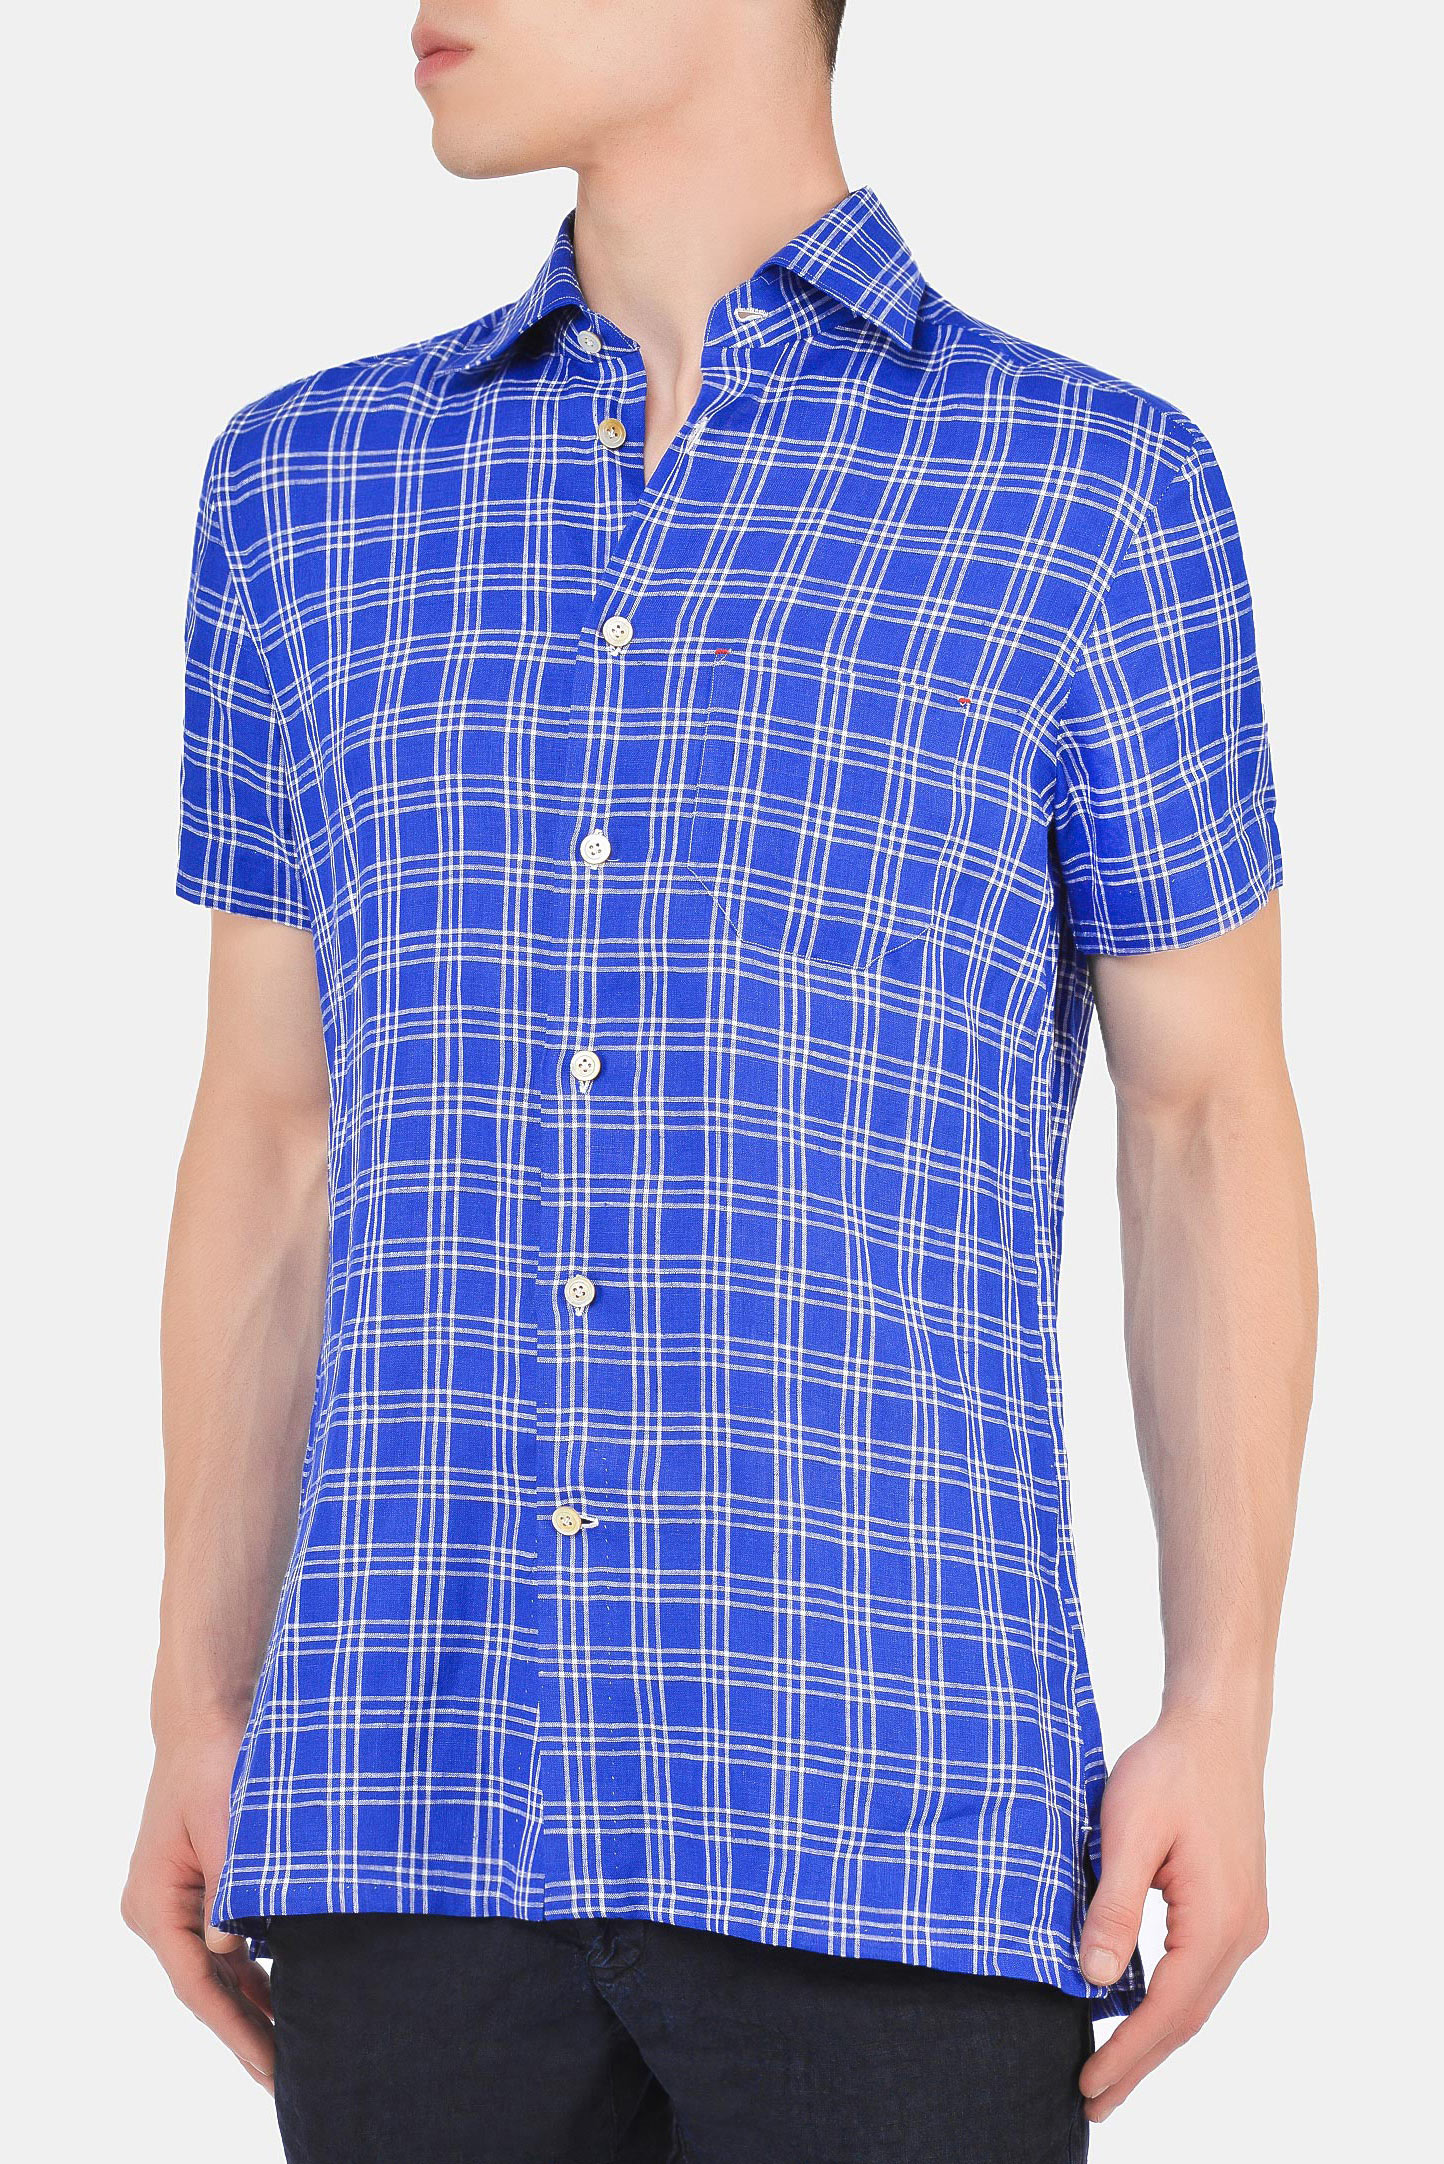 Рубашка KITON UMCNERH076991, цвет: Синий, Мужской